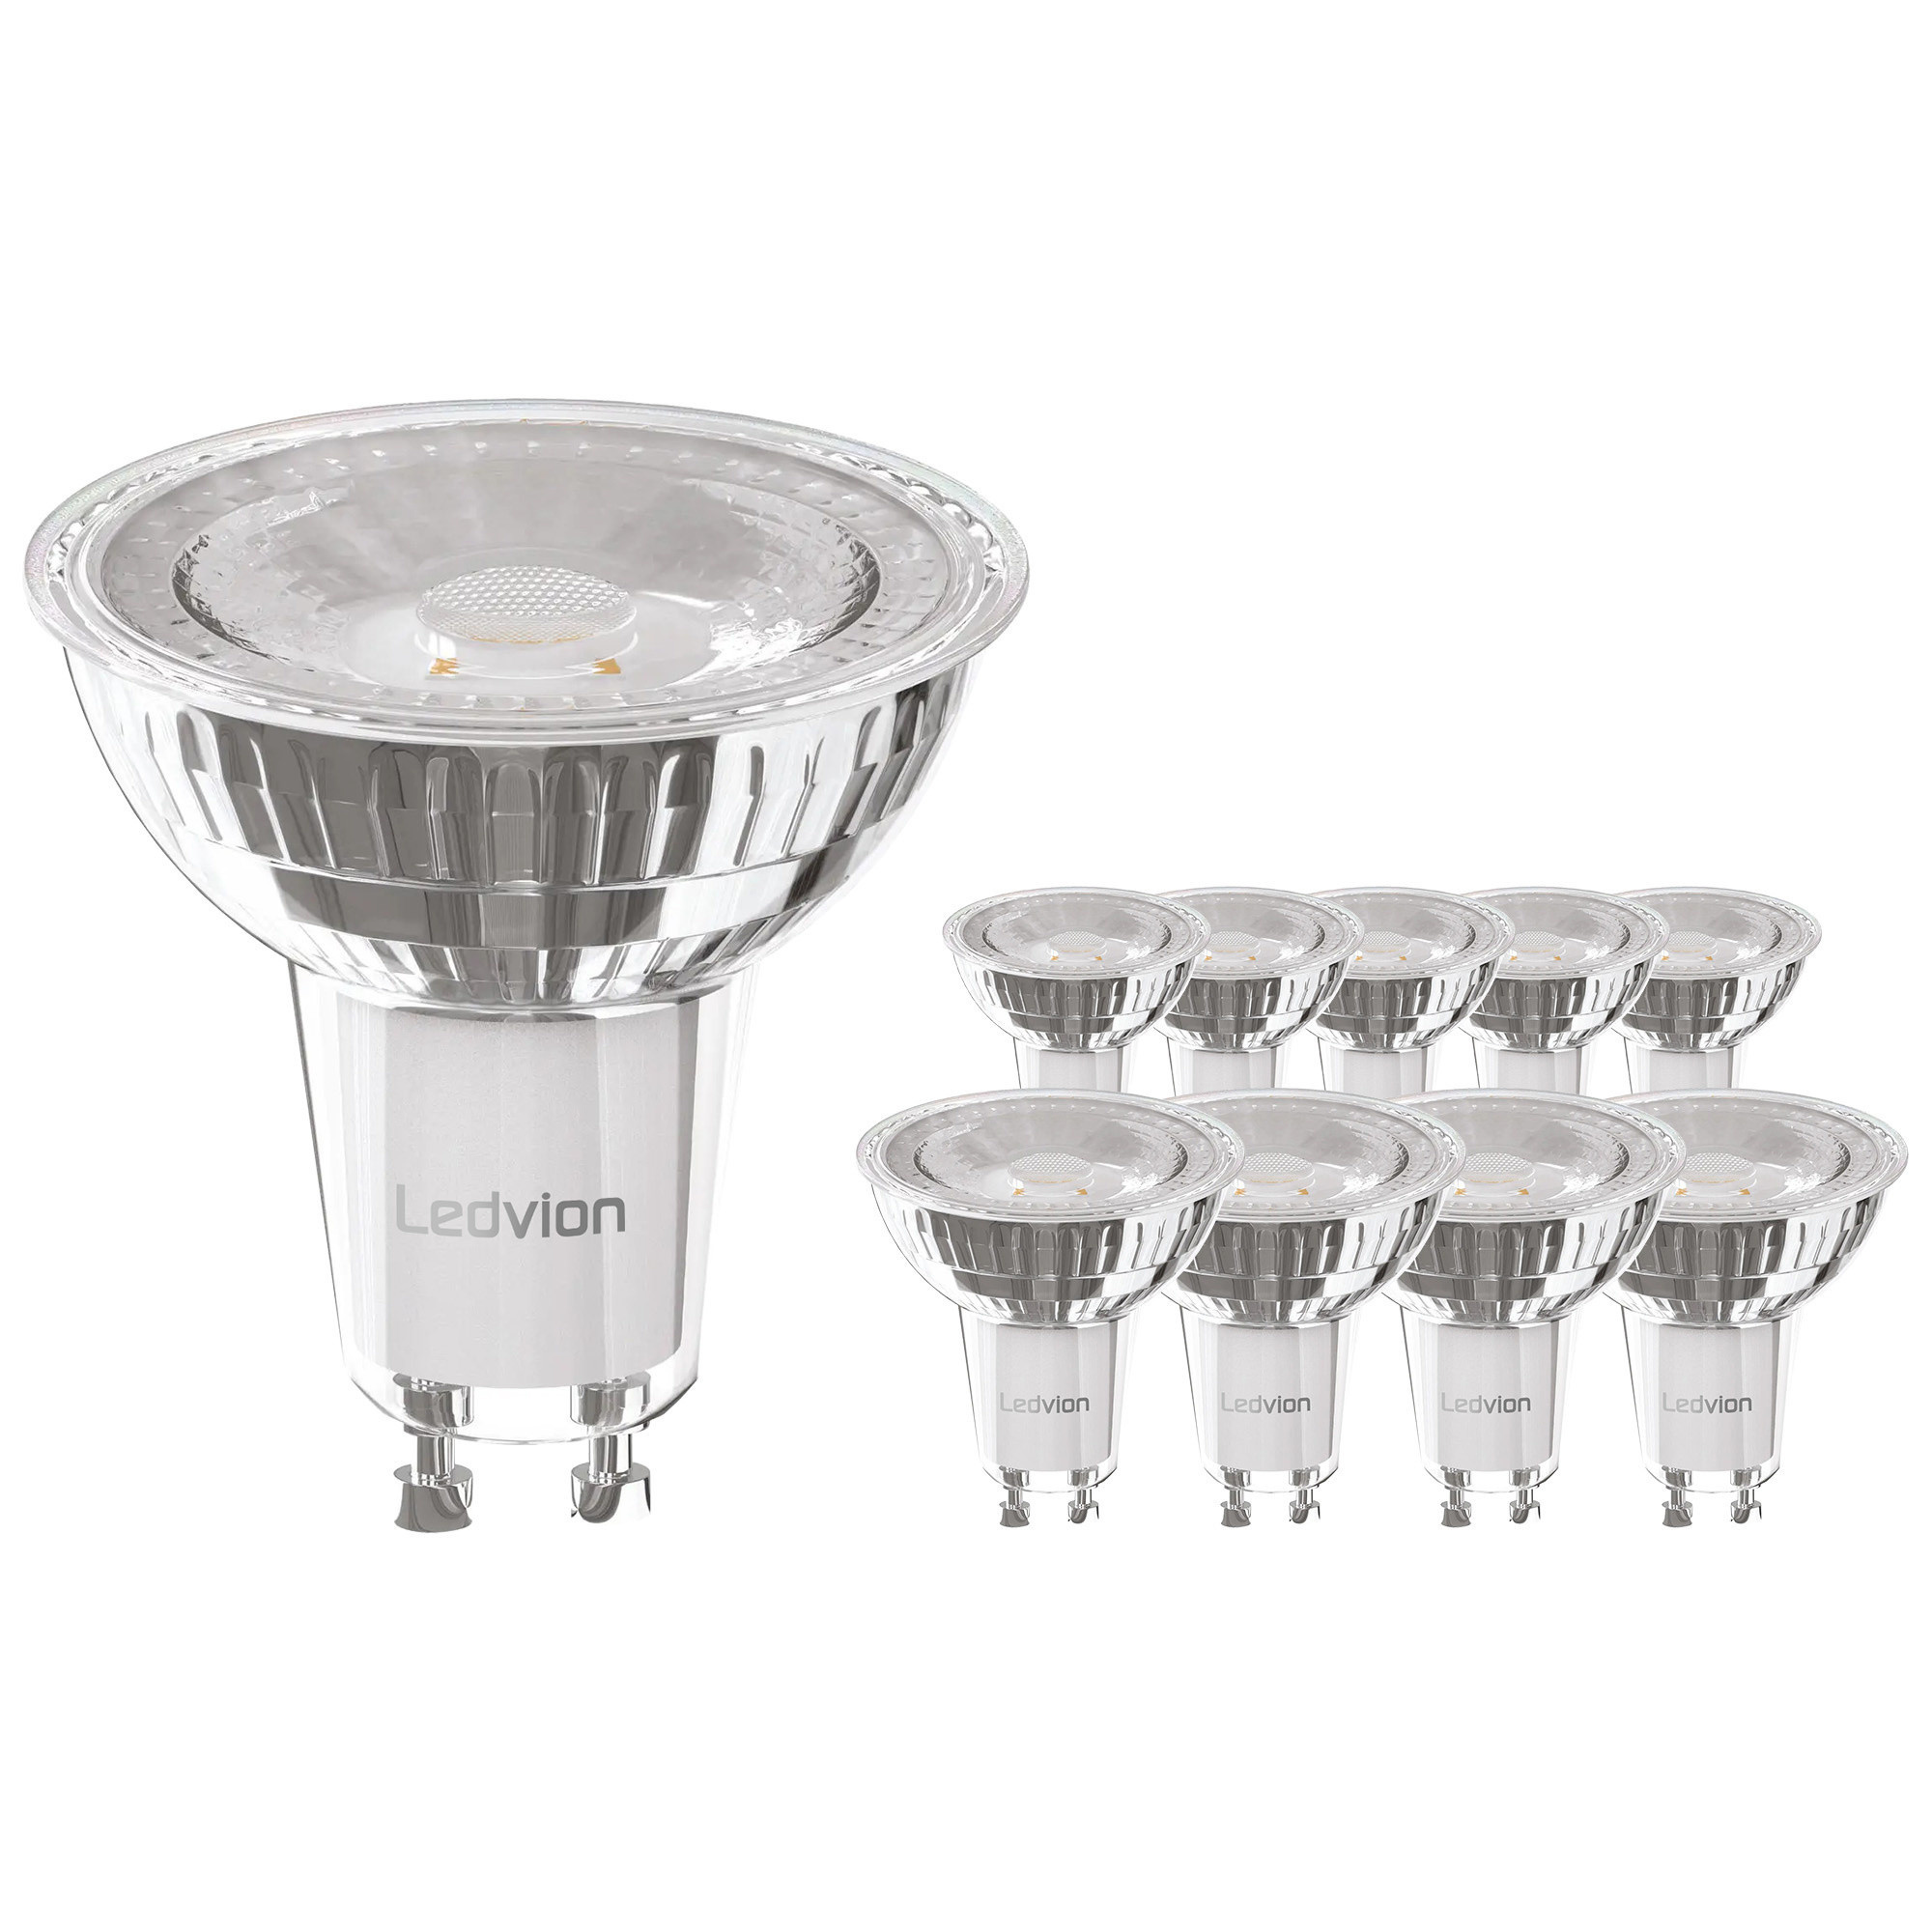 10x Lampadine LED GU10 - 4.5W - 2700K - 345 Lumen - Bicchiere - Pacchetto  sconto 